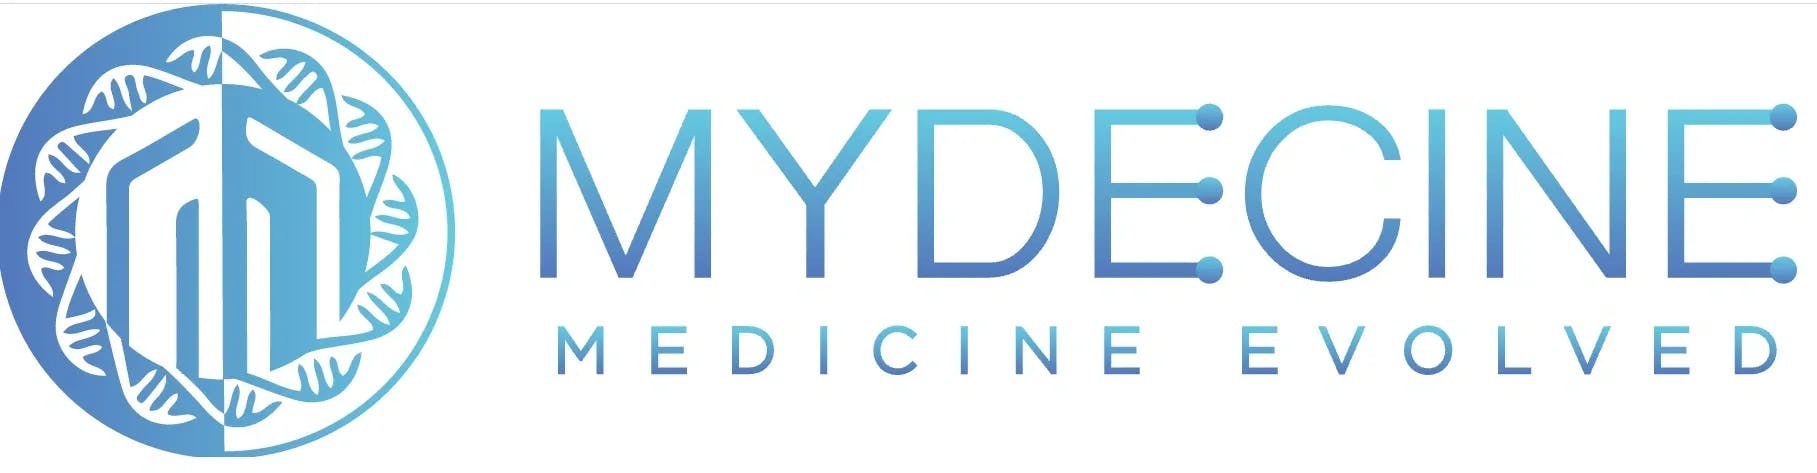 Mydecine Innovations Group Inc